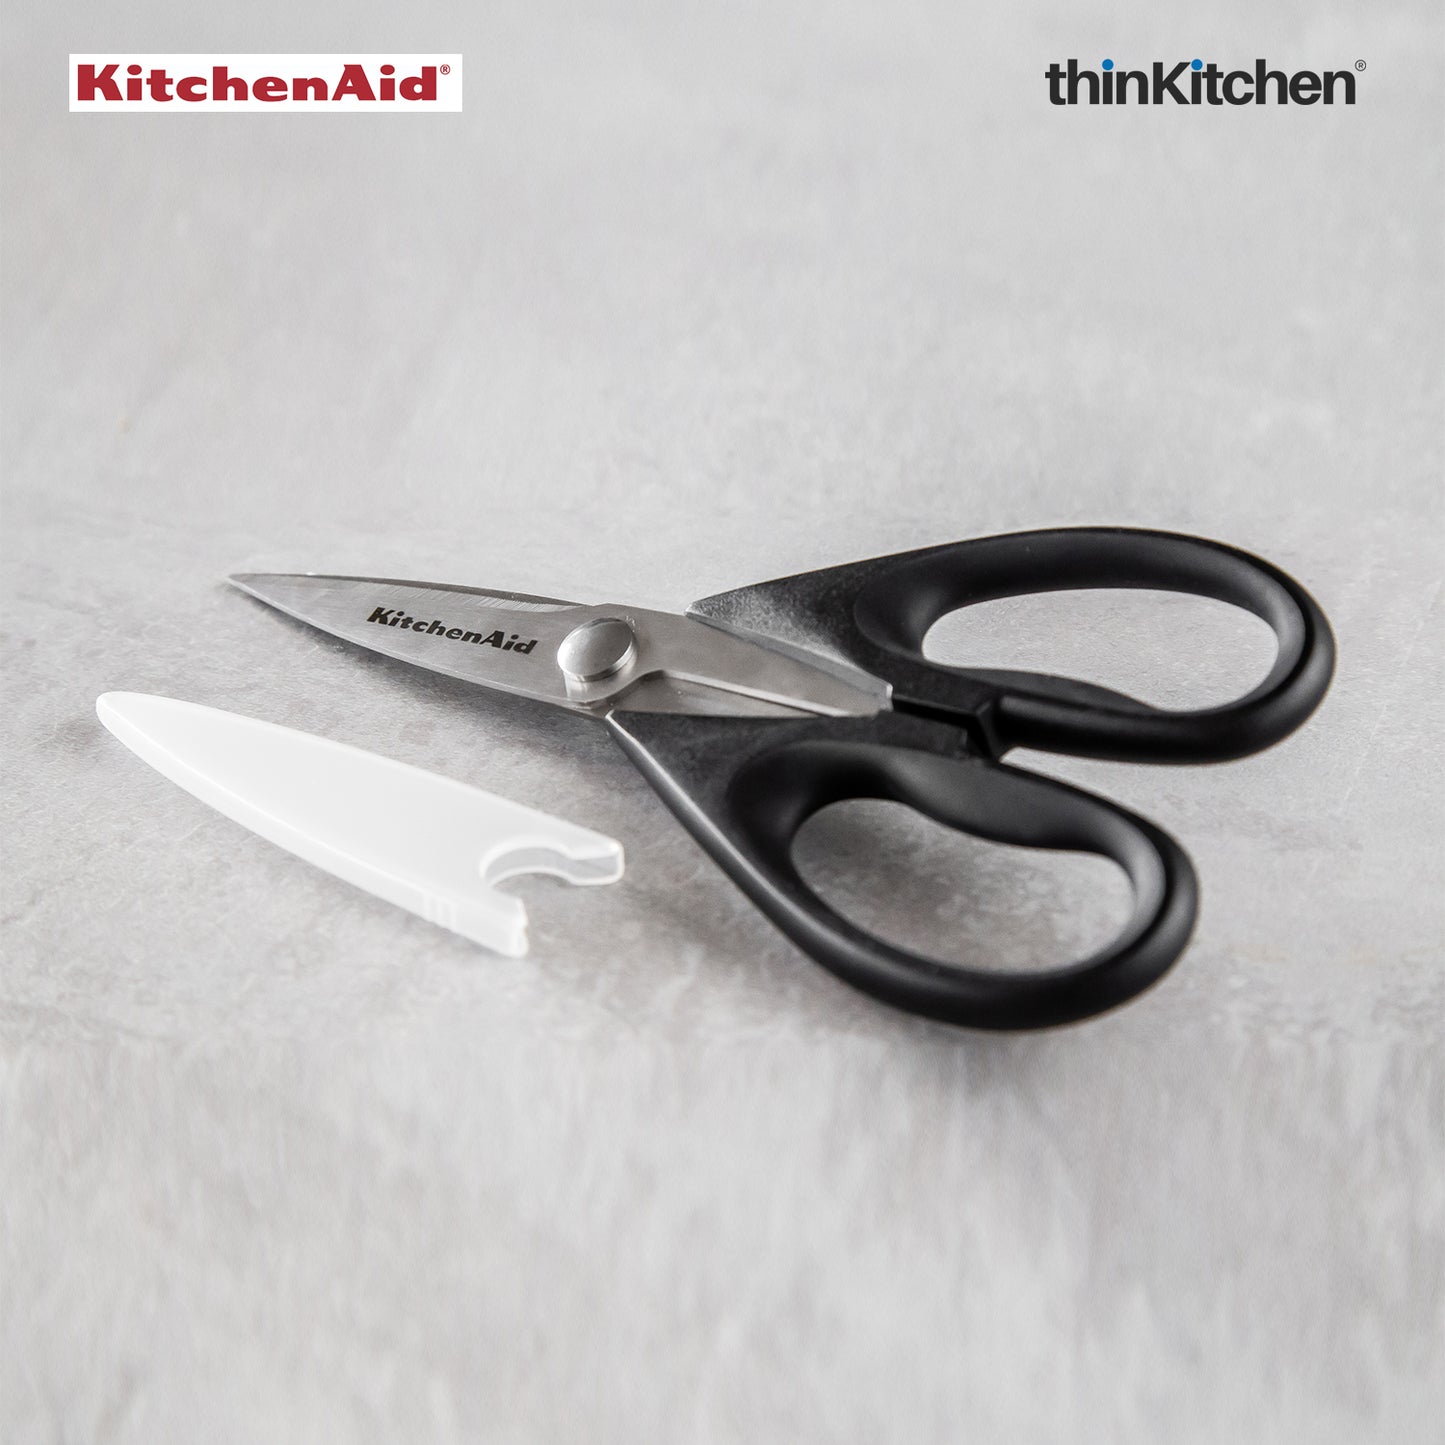 Kitchenaid Stainless Steel All Purpose Kitchen Scissors